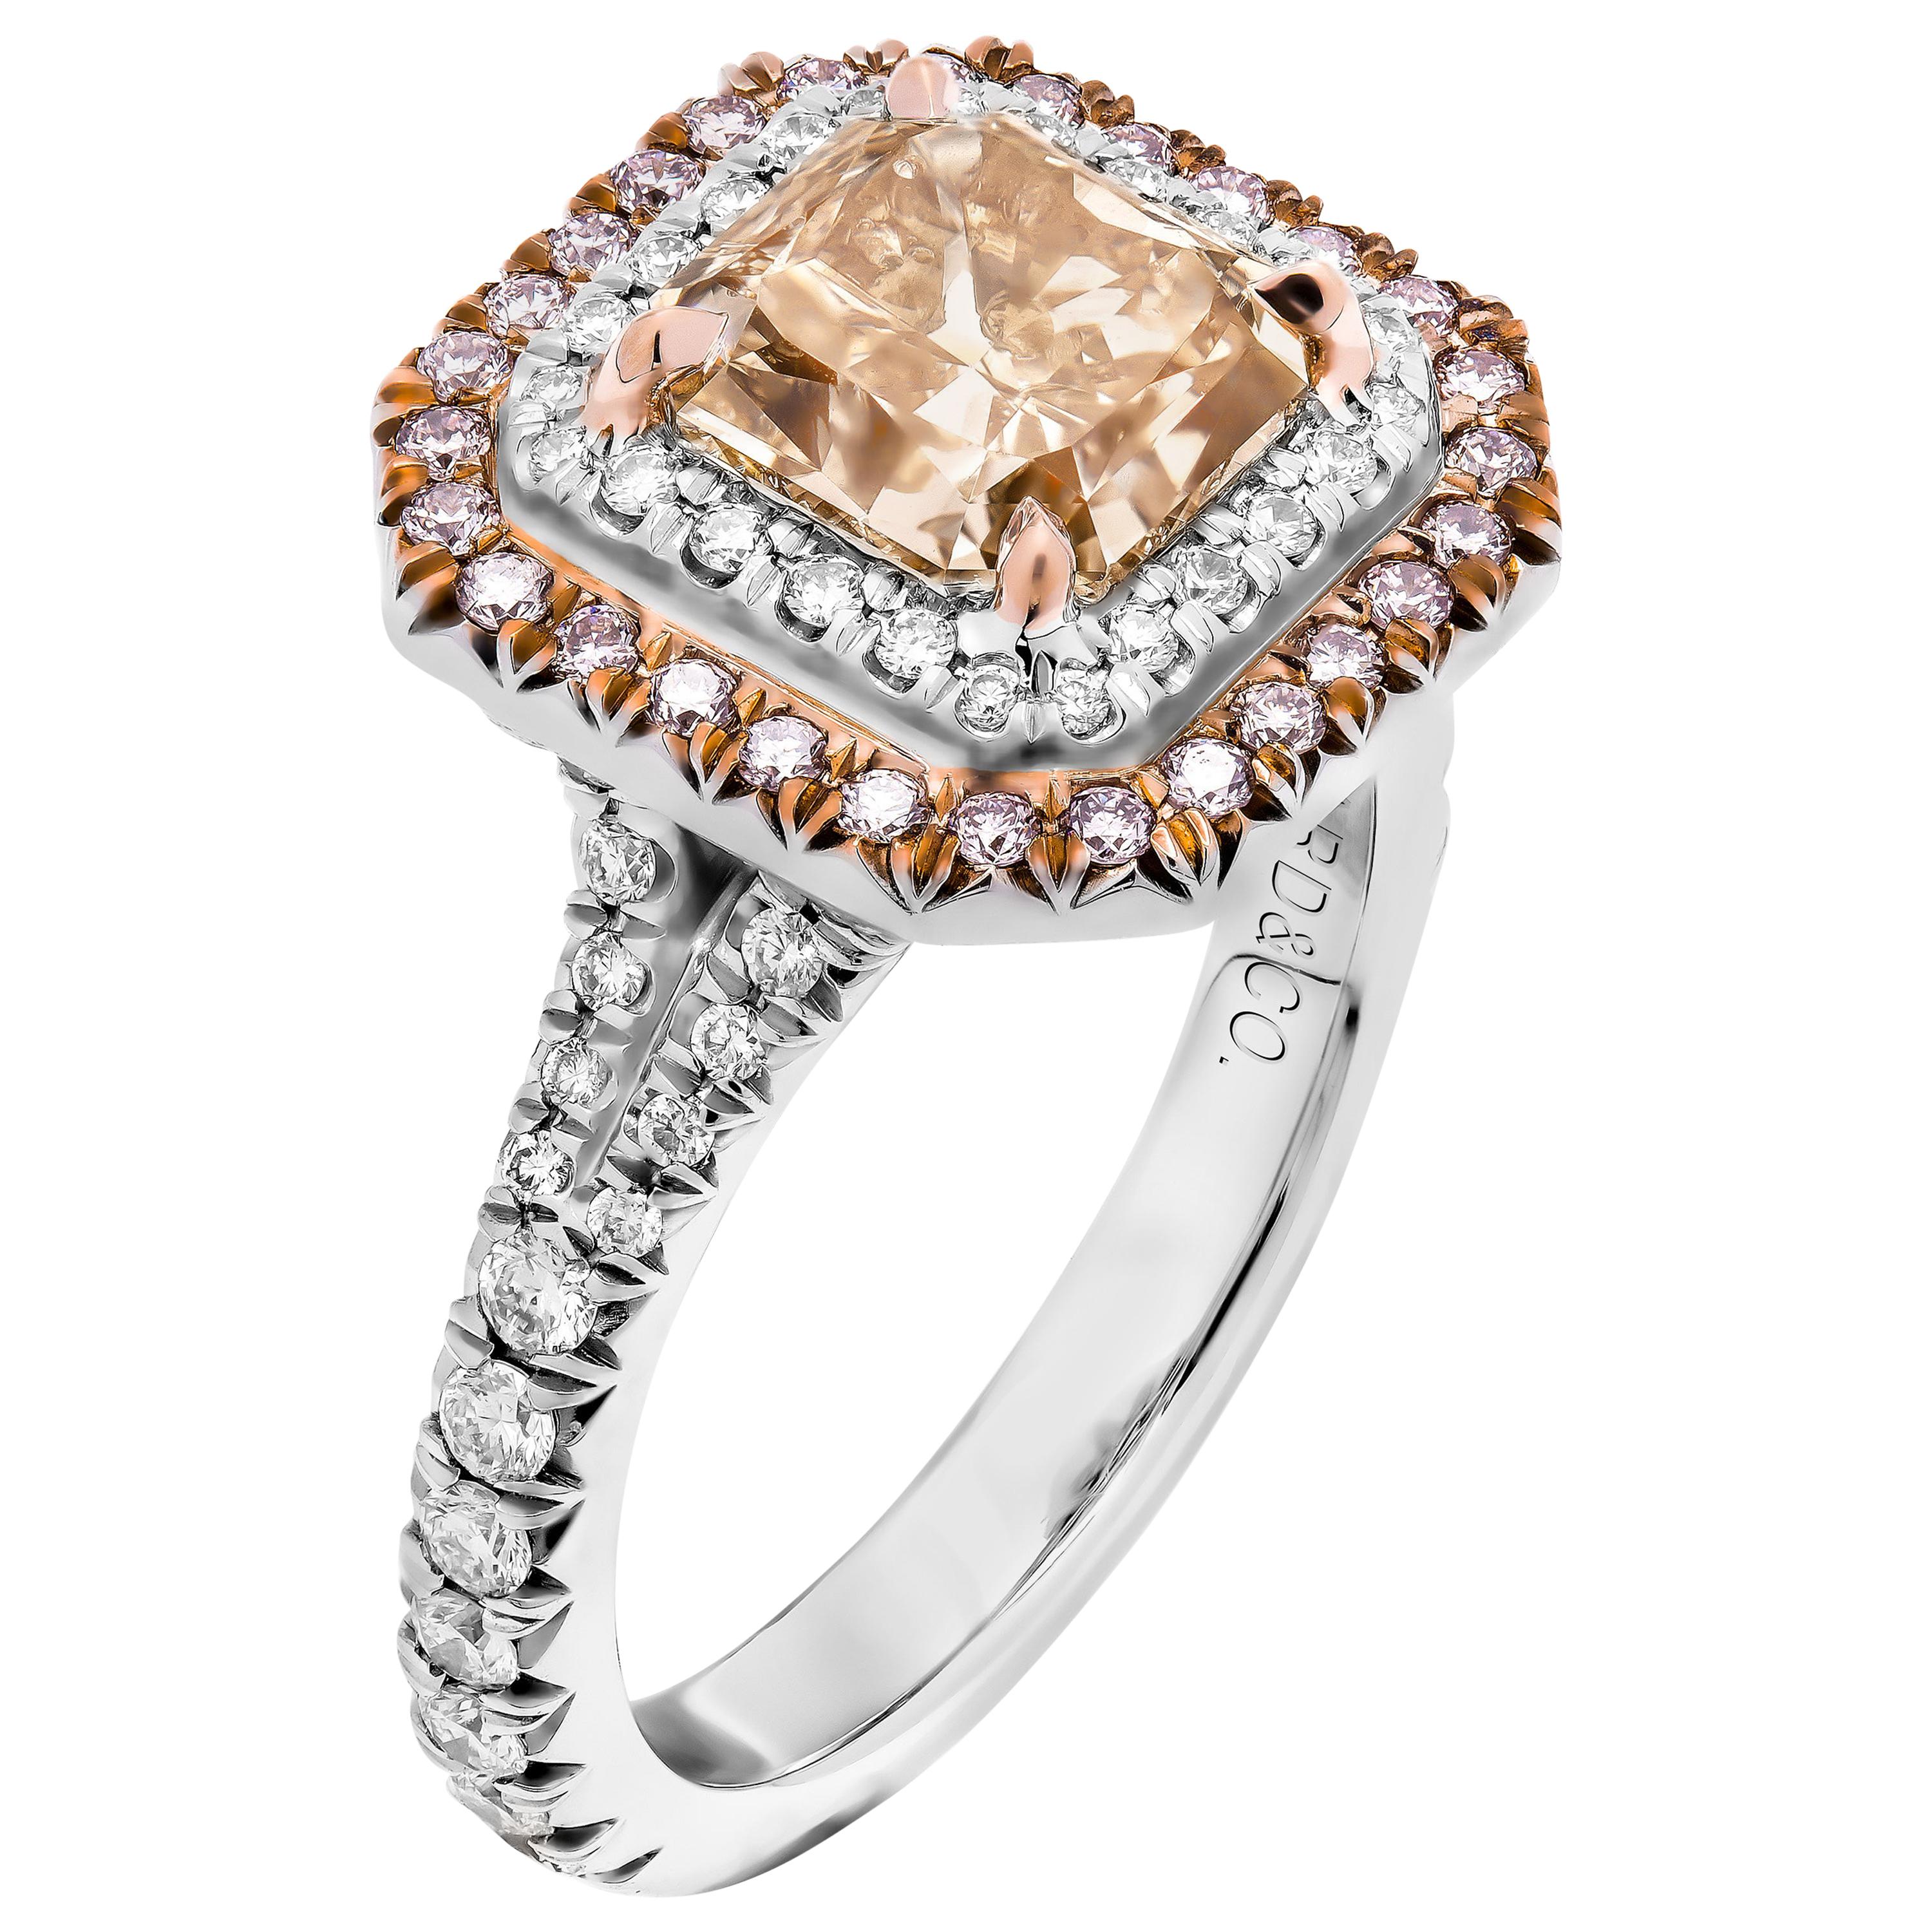 GIA Certified Ring with 2.07 Carat Fancy Brown Orange VS2 Cushion Diamond